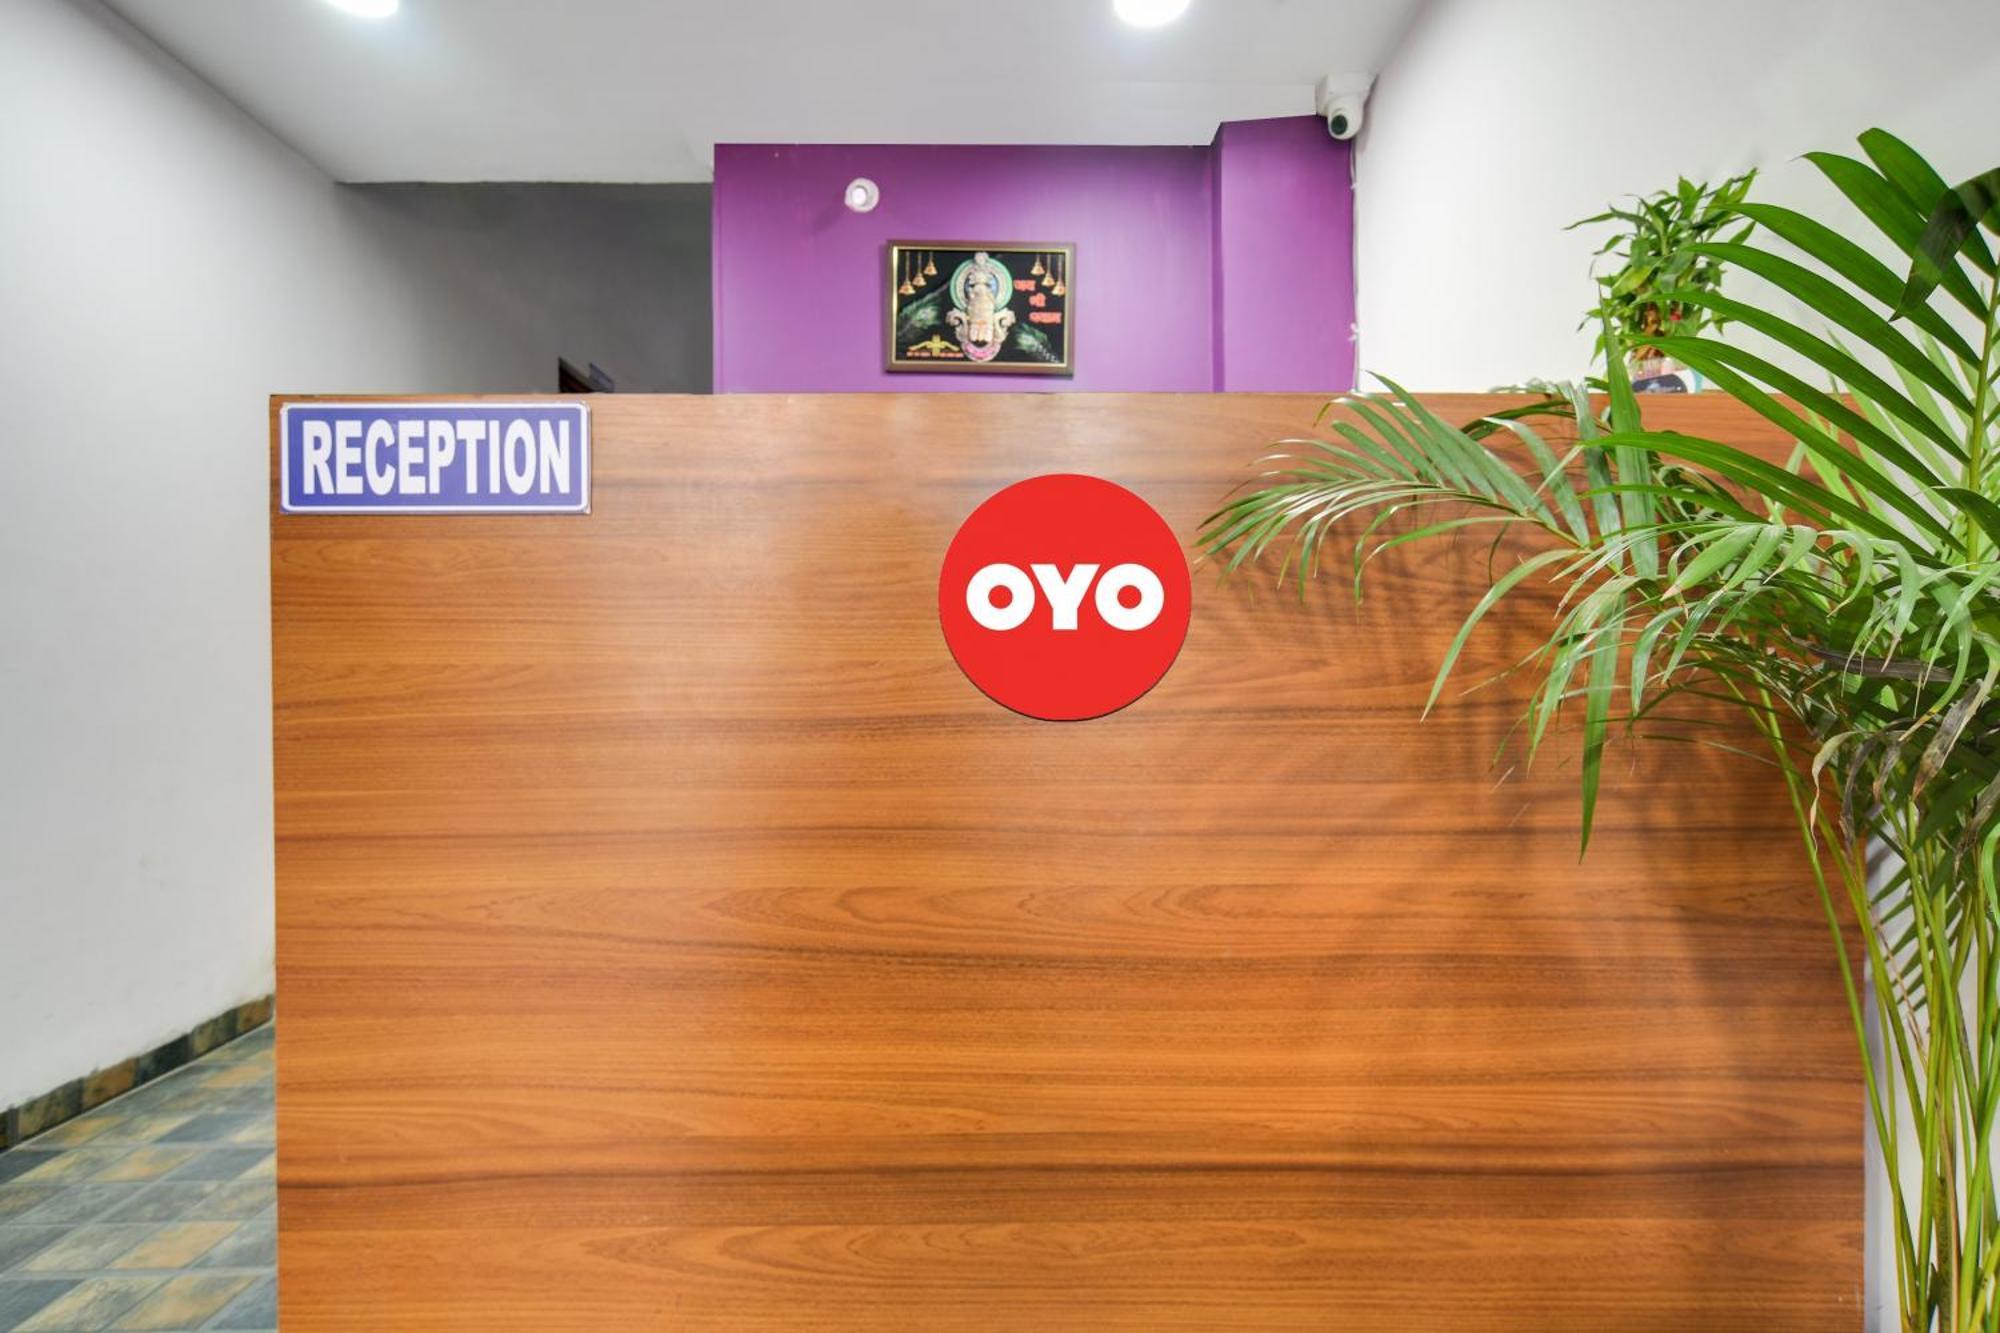 Oyo Hotel Inspira Residency インドール エクステリア 写真